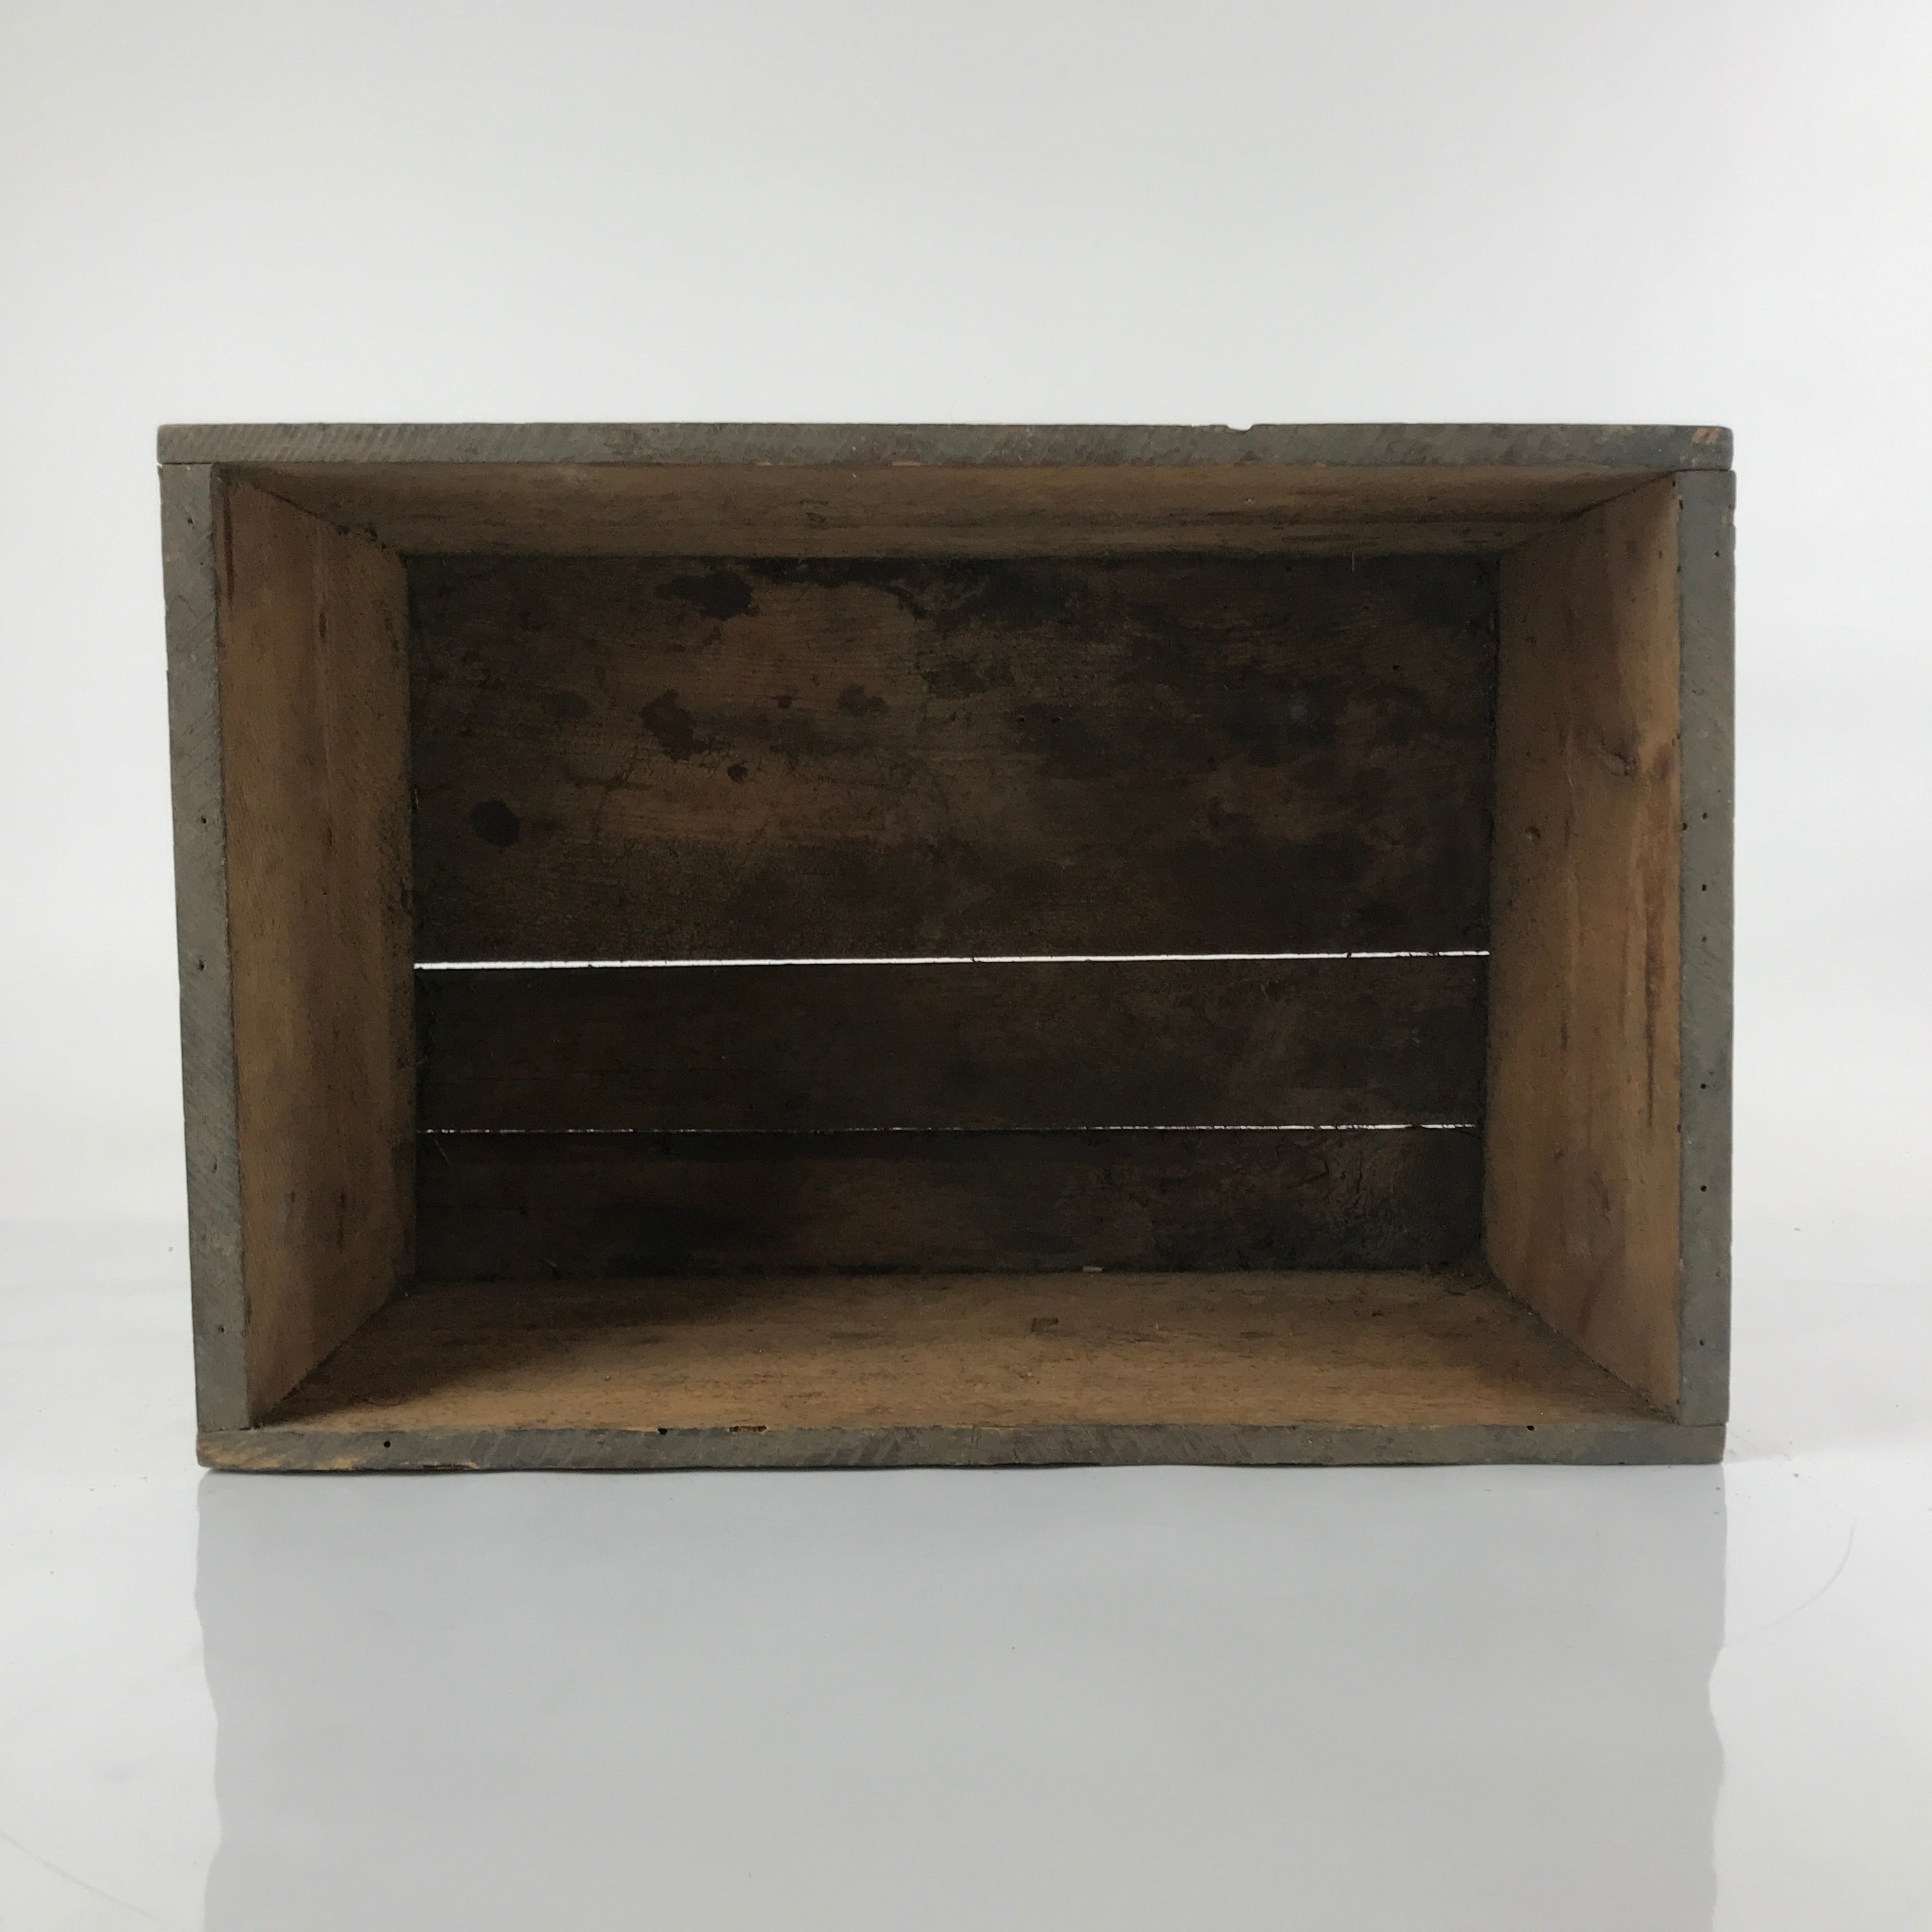 Vintage Japanese Open Wooden Storage Box Inside 44x29.5x22cm Brown Crate X116